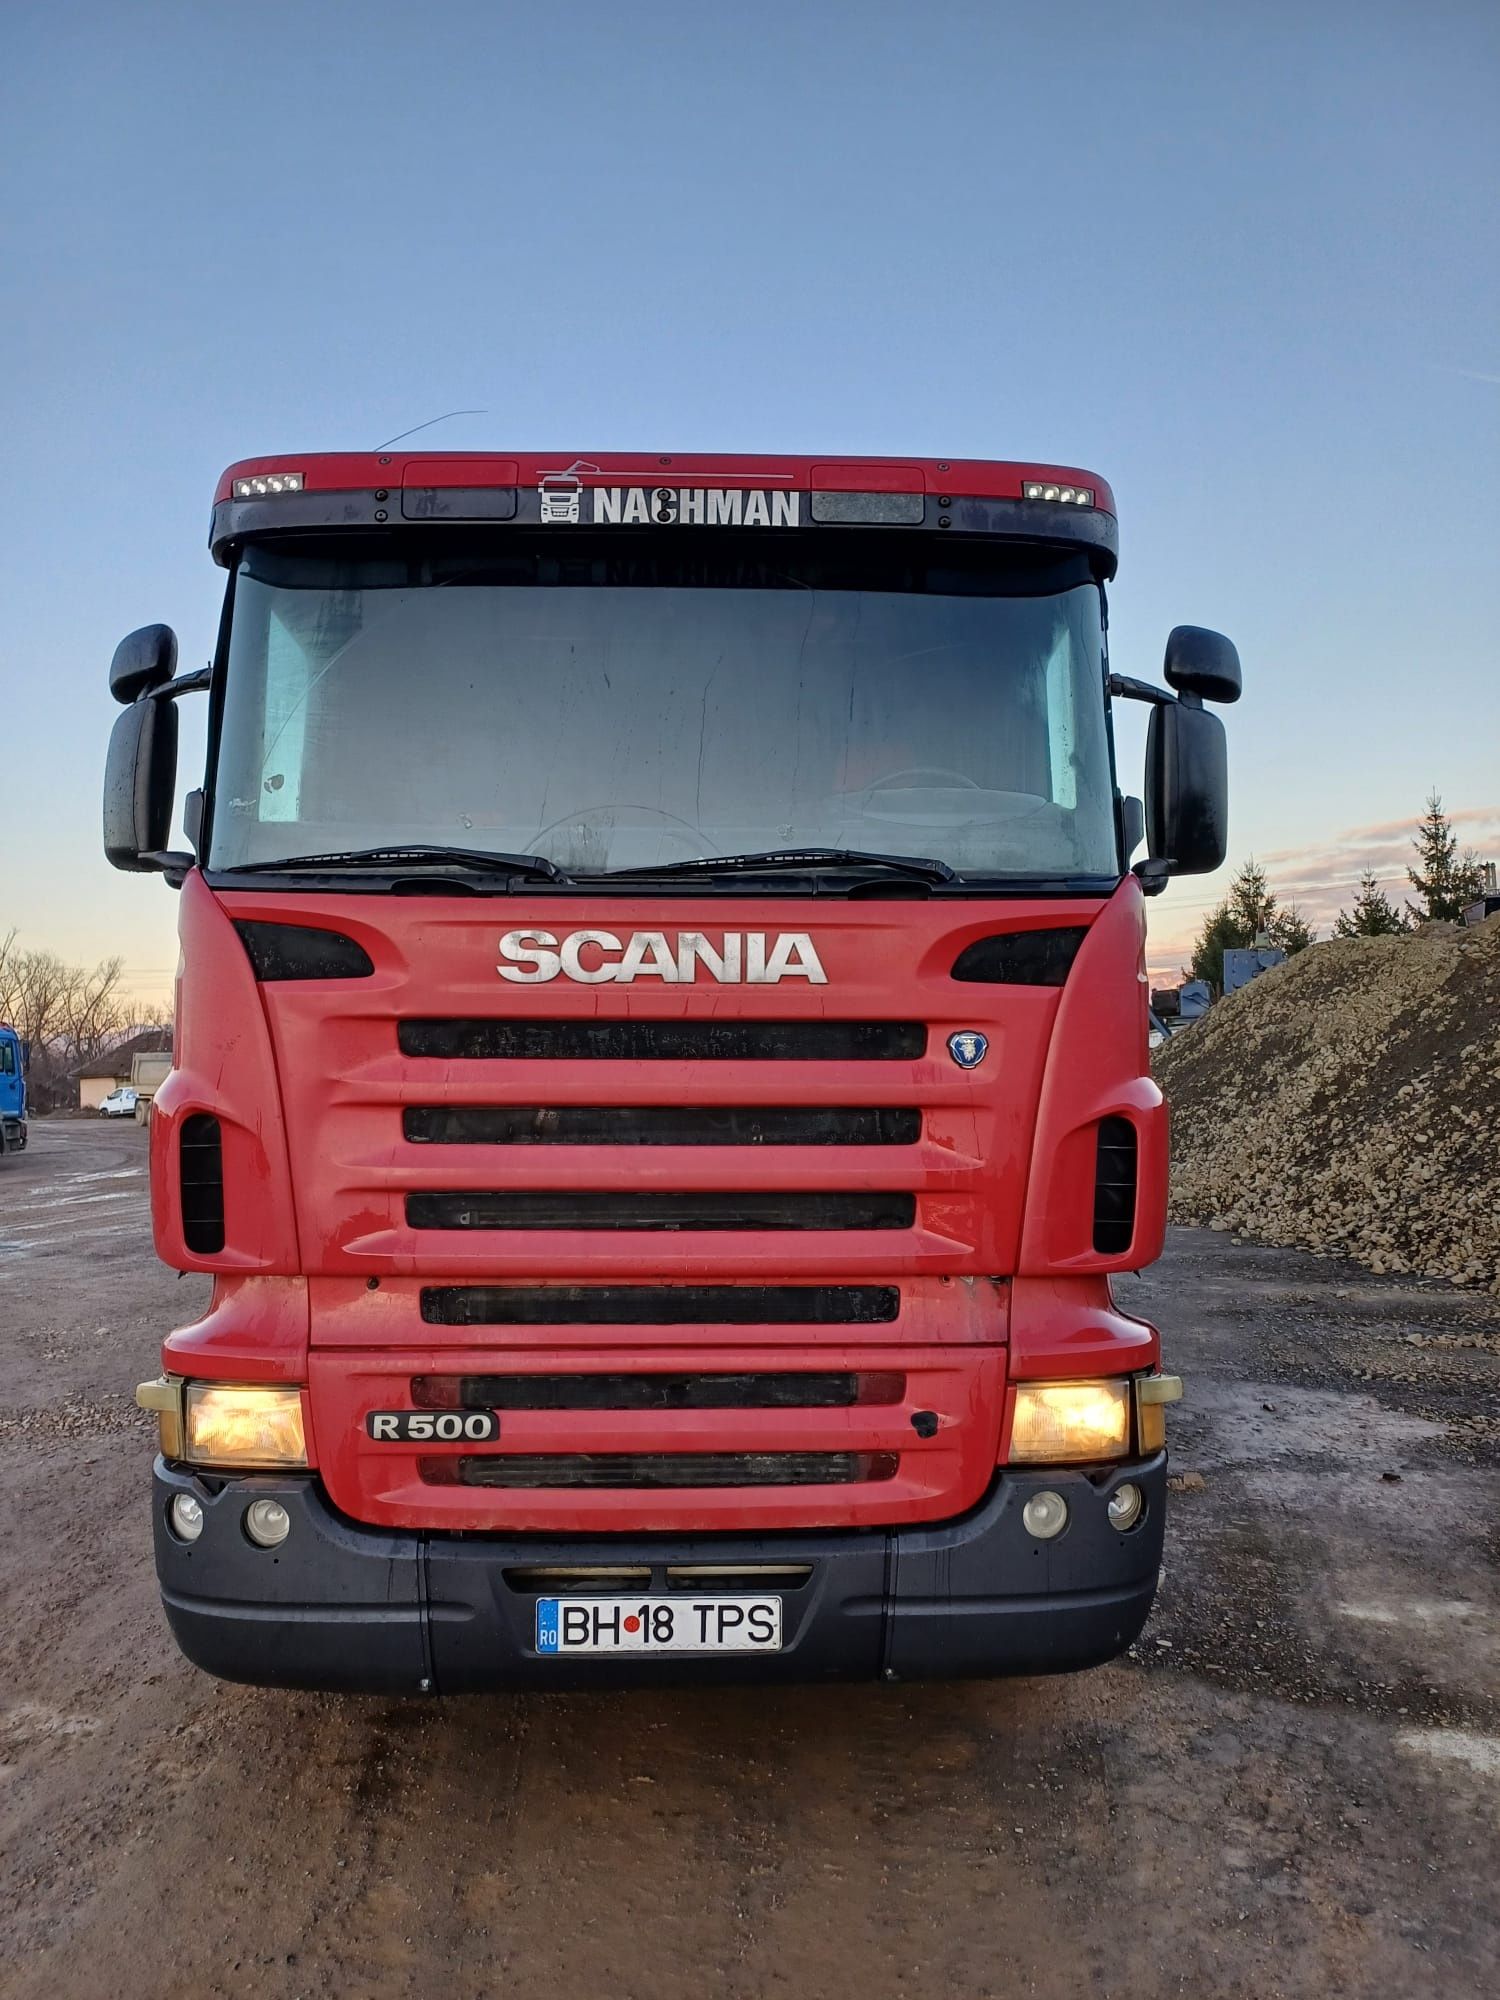 Vând sau schimb Camion forestier Scania Peridoc